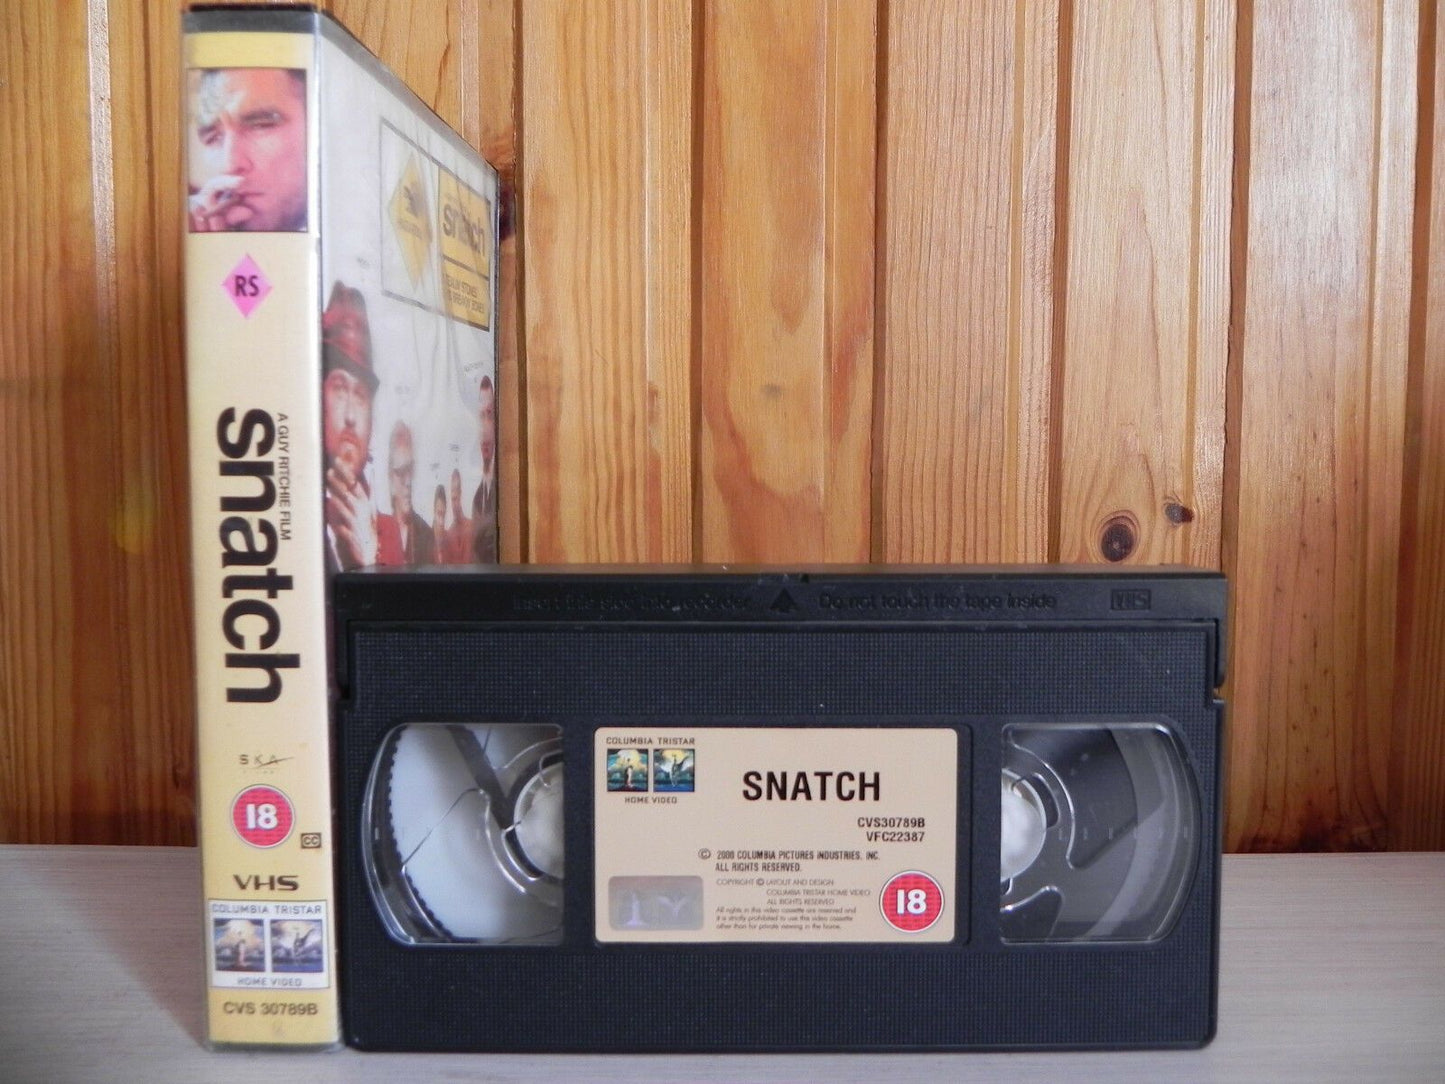 Snatch - Columbia Tristar - Action - Cert (18) - Jason Statham - Brad Pitt - VHS-